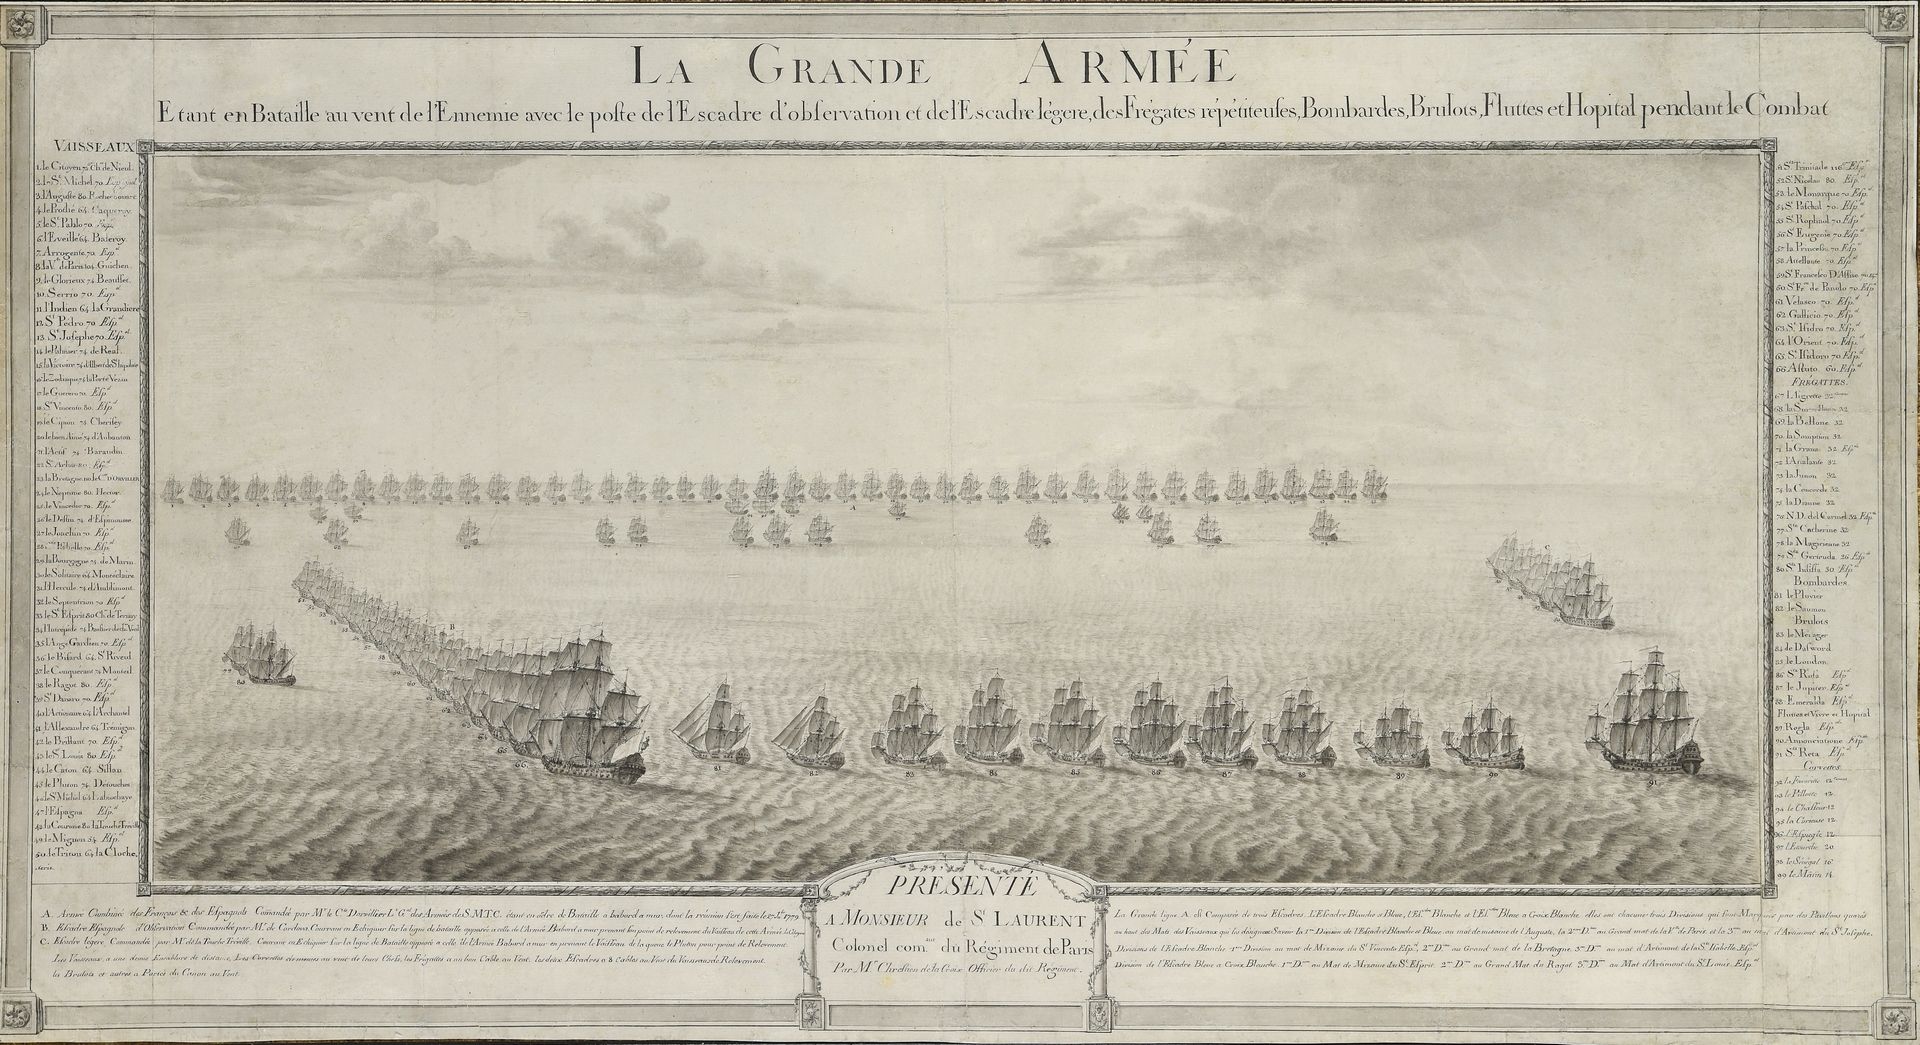 Null Chrestien de LA CROIX (Conde)
Oficial de 1753 a 1787

"El Gran Ejército

Fu&hellip;